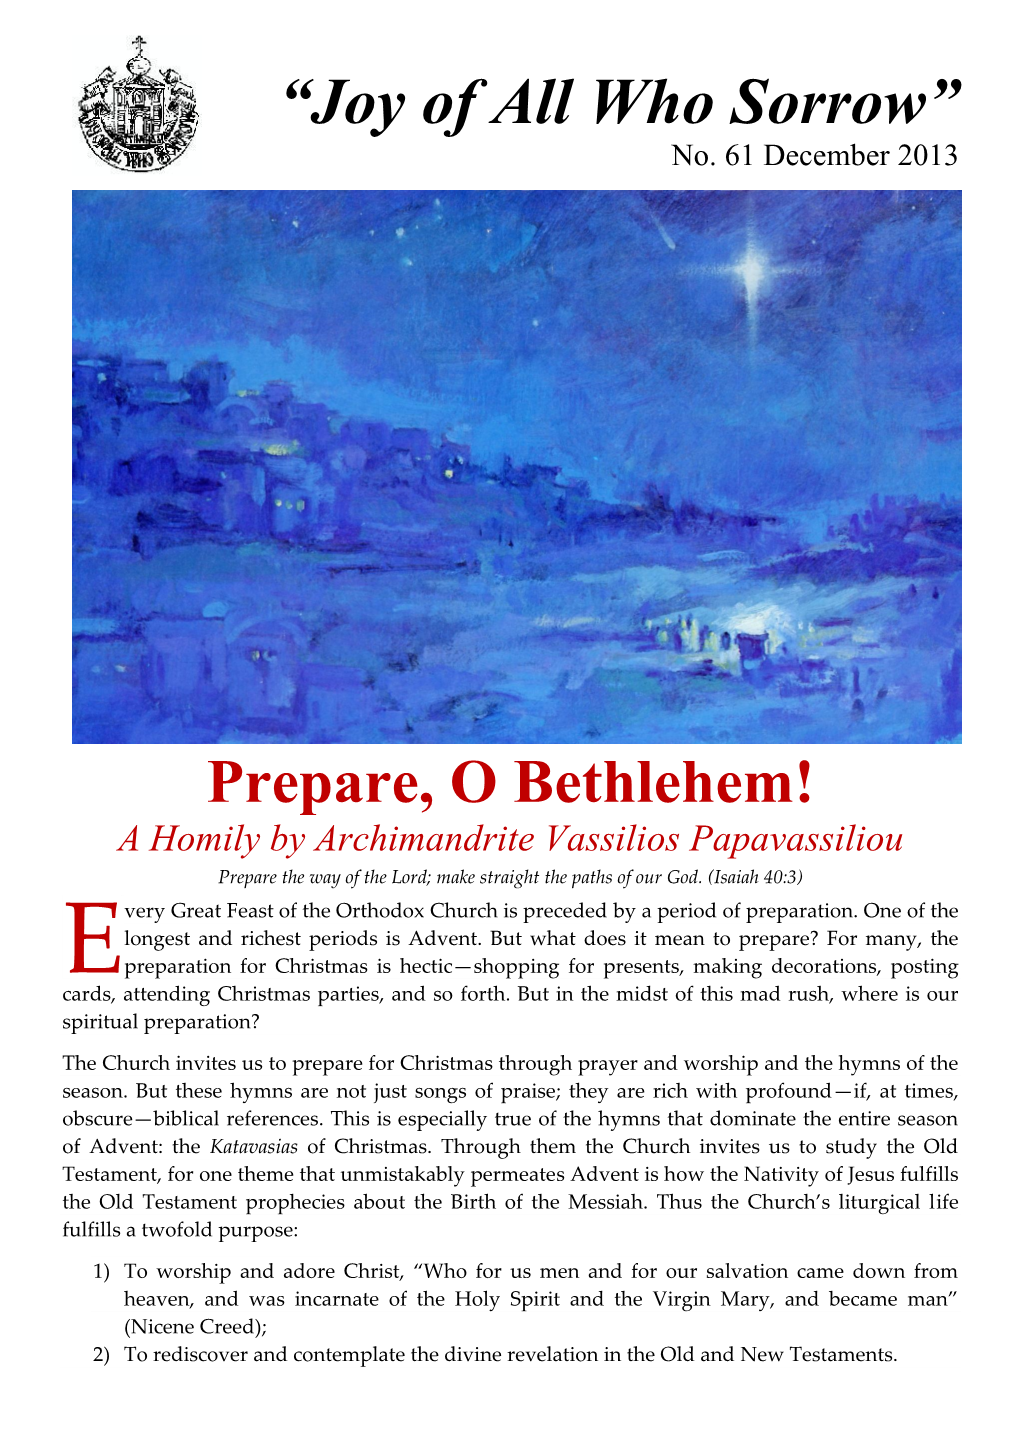 Prepare, O Bethlehem! a Homily by Archimandrite Vassilios Papavassiliou